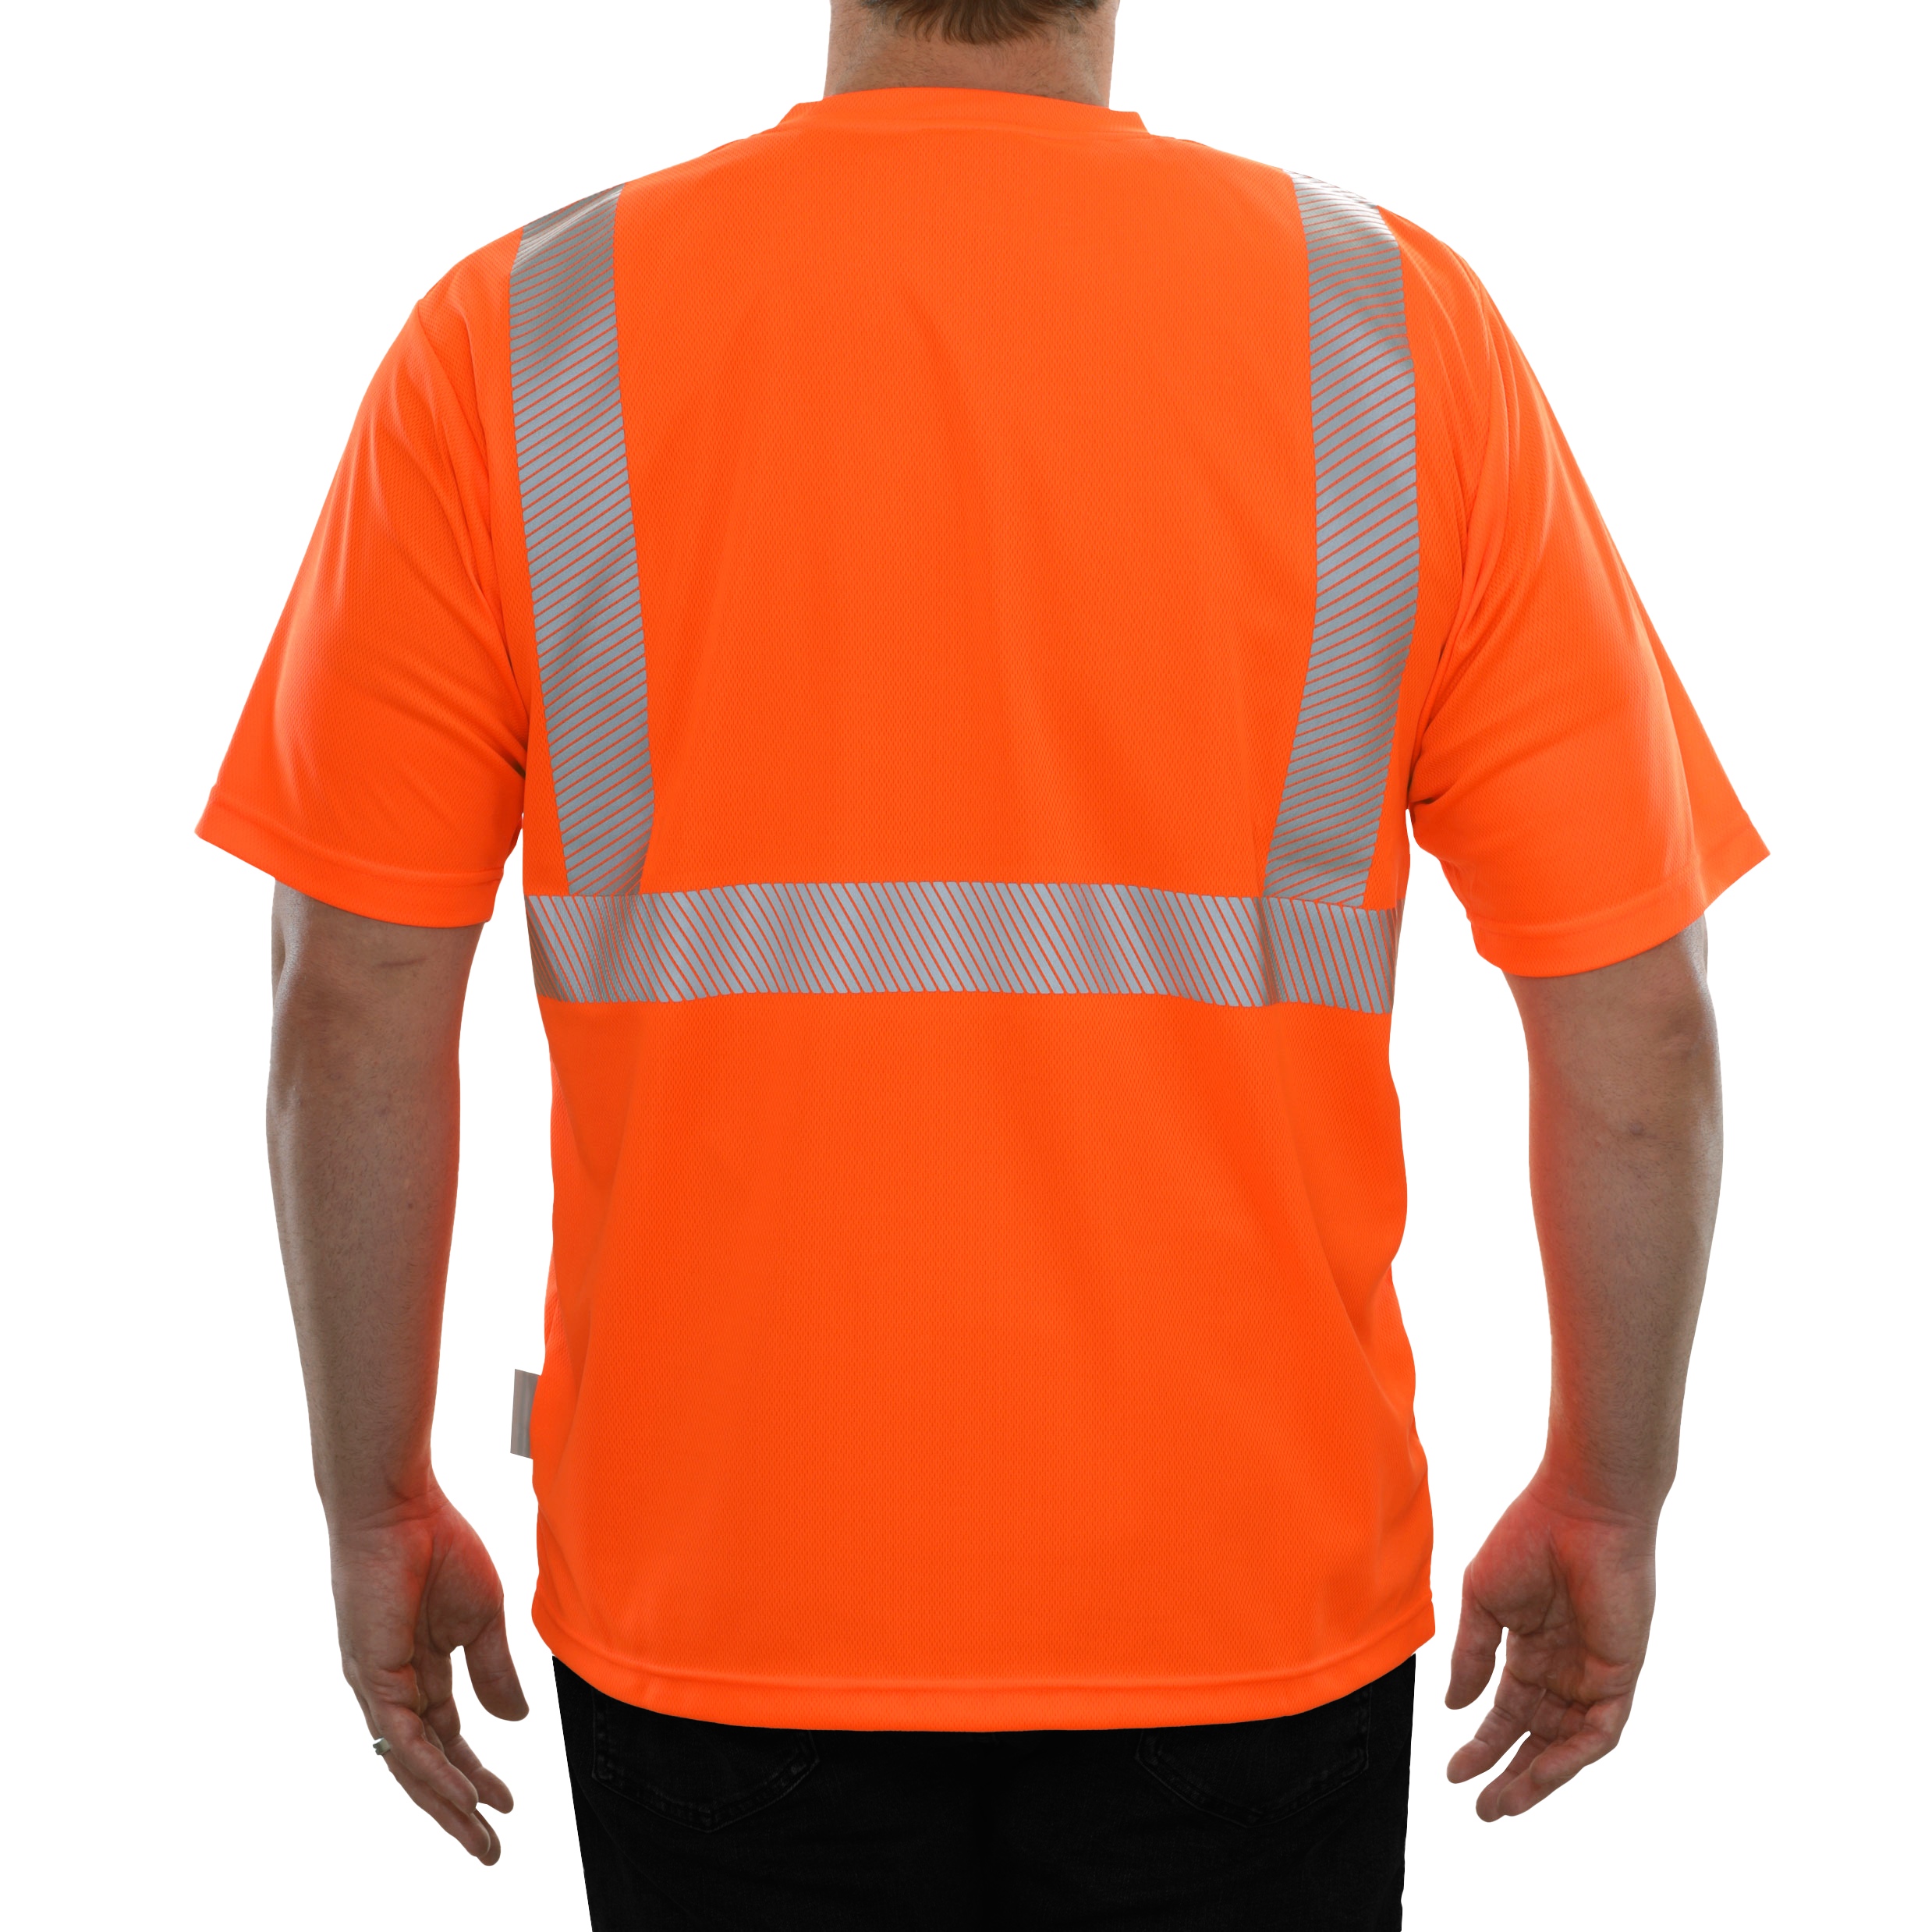 Reflective Apparel High Visibility Safety Shirt Orange Birdseye Comfort Trim By 3M